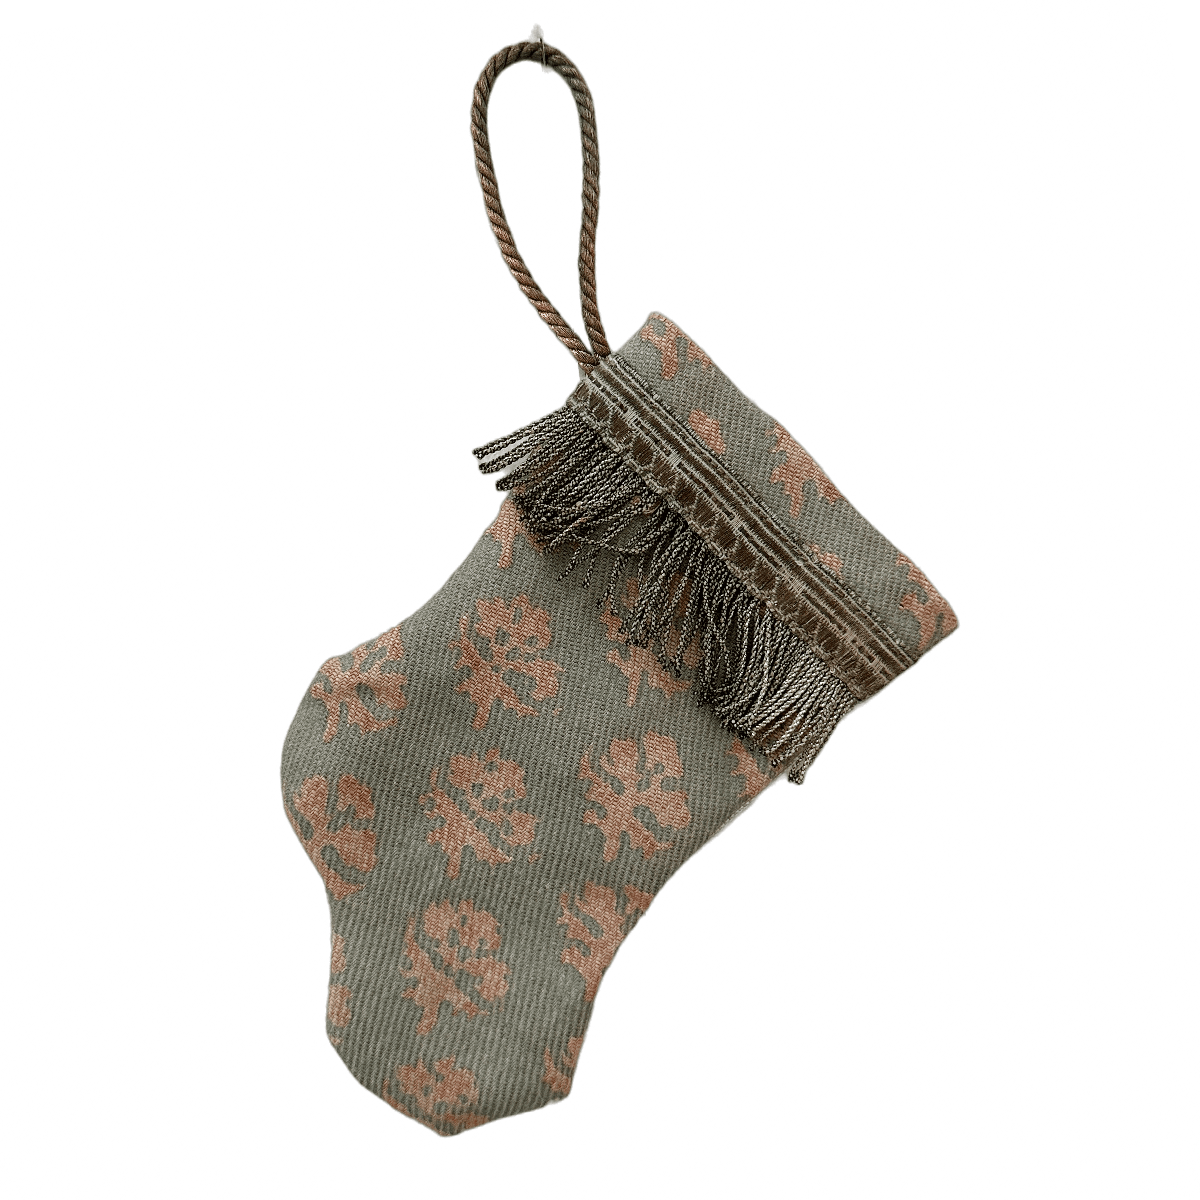 Handmade Mini Stocking Ornament from Antique & Vintage Textiles, Trims | Mint Fortuny Ornament B. Viz Design A 